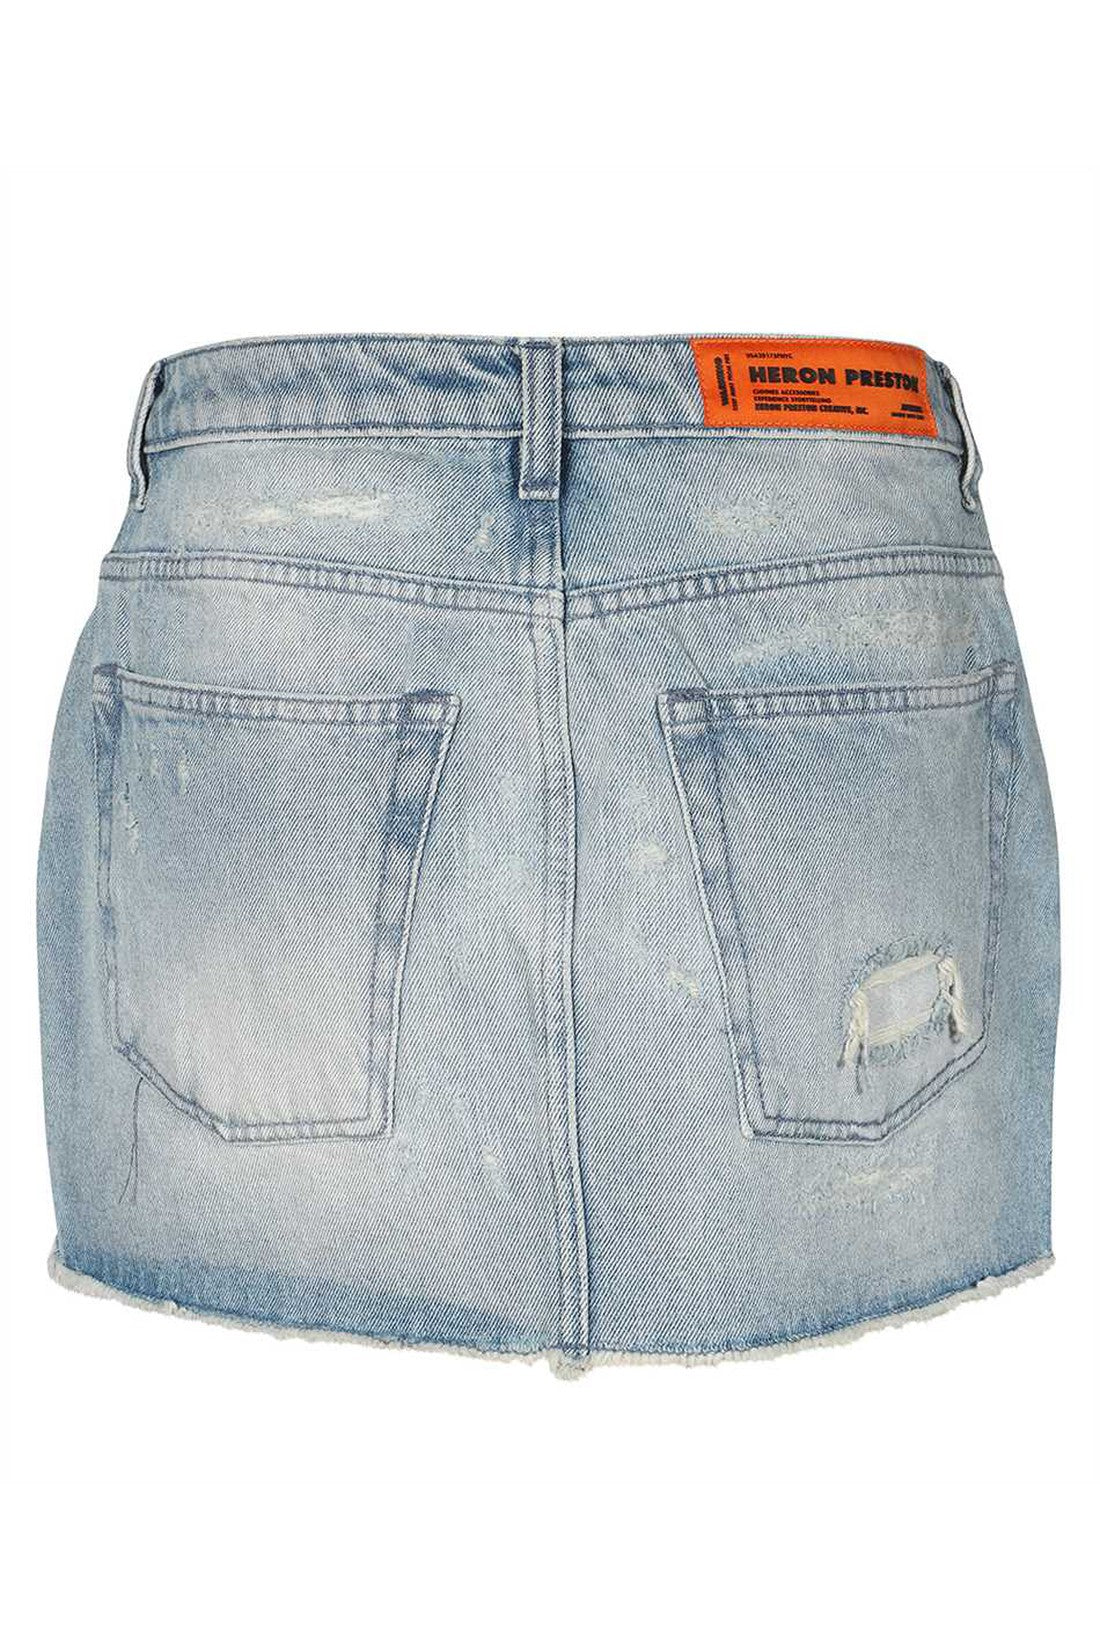 Denim mini skirt-Bekleidung Röcke-Heron Preston-OUTLET-SALE-ARCHIVIST